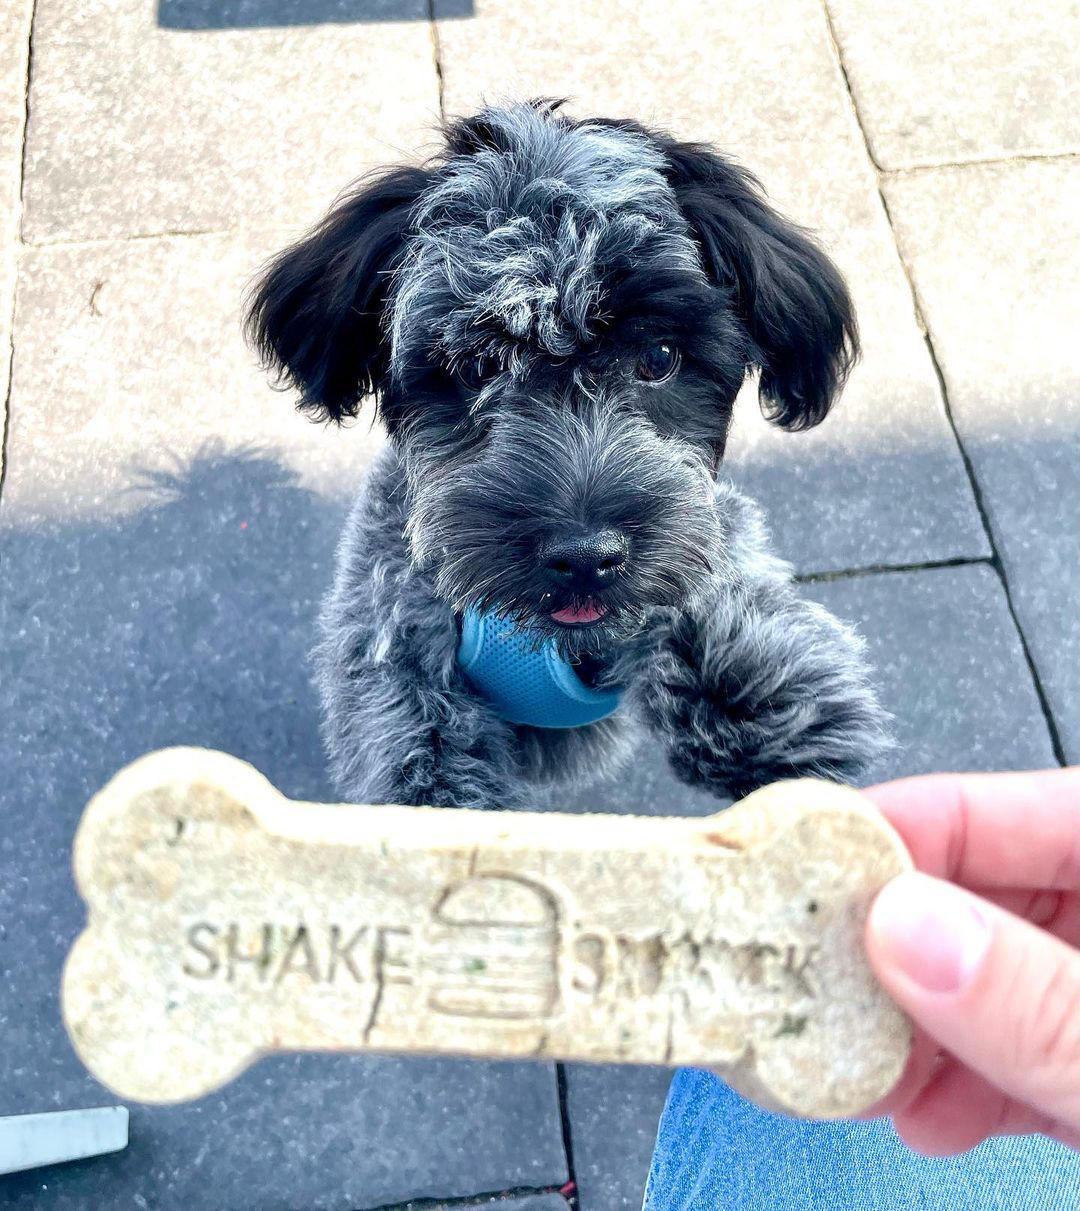 Shake Shack - Good boy appreciation post